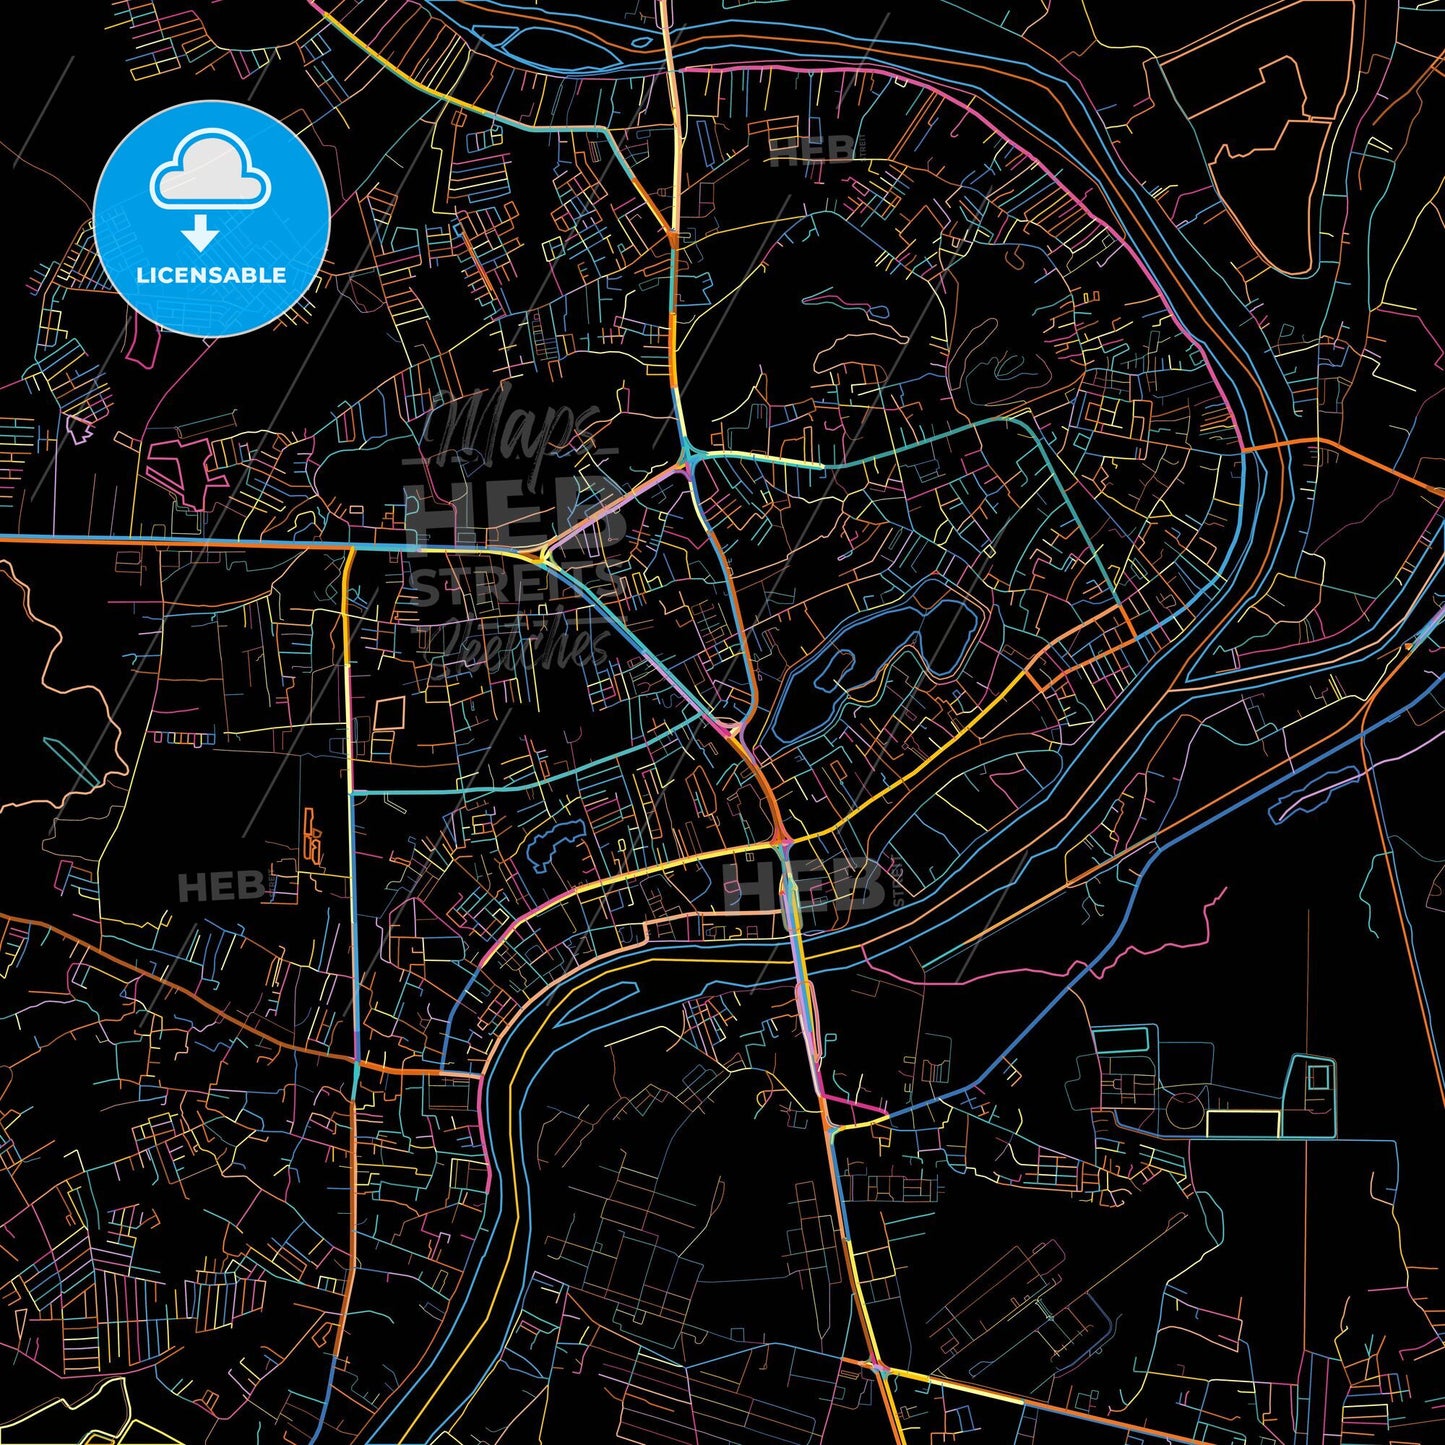 Nakhon Sawan, Nakhon Sawan, Thailand, colorful city map on black background